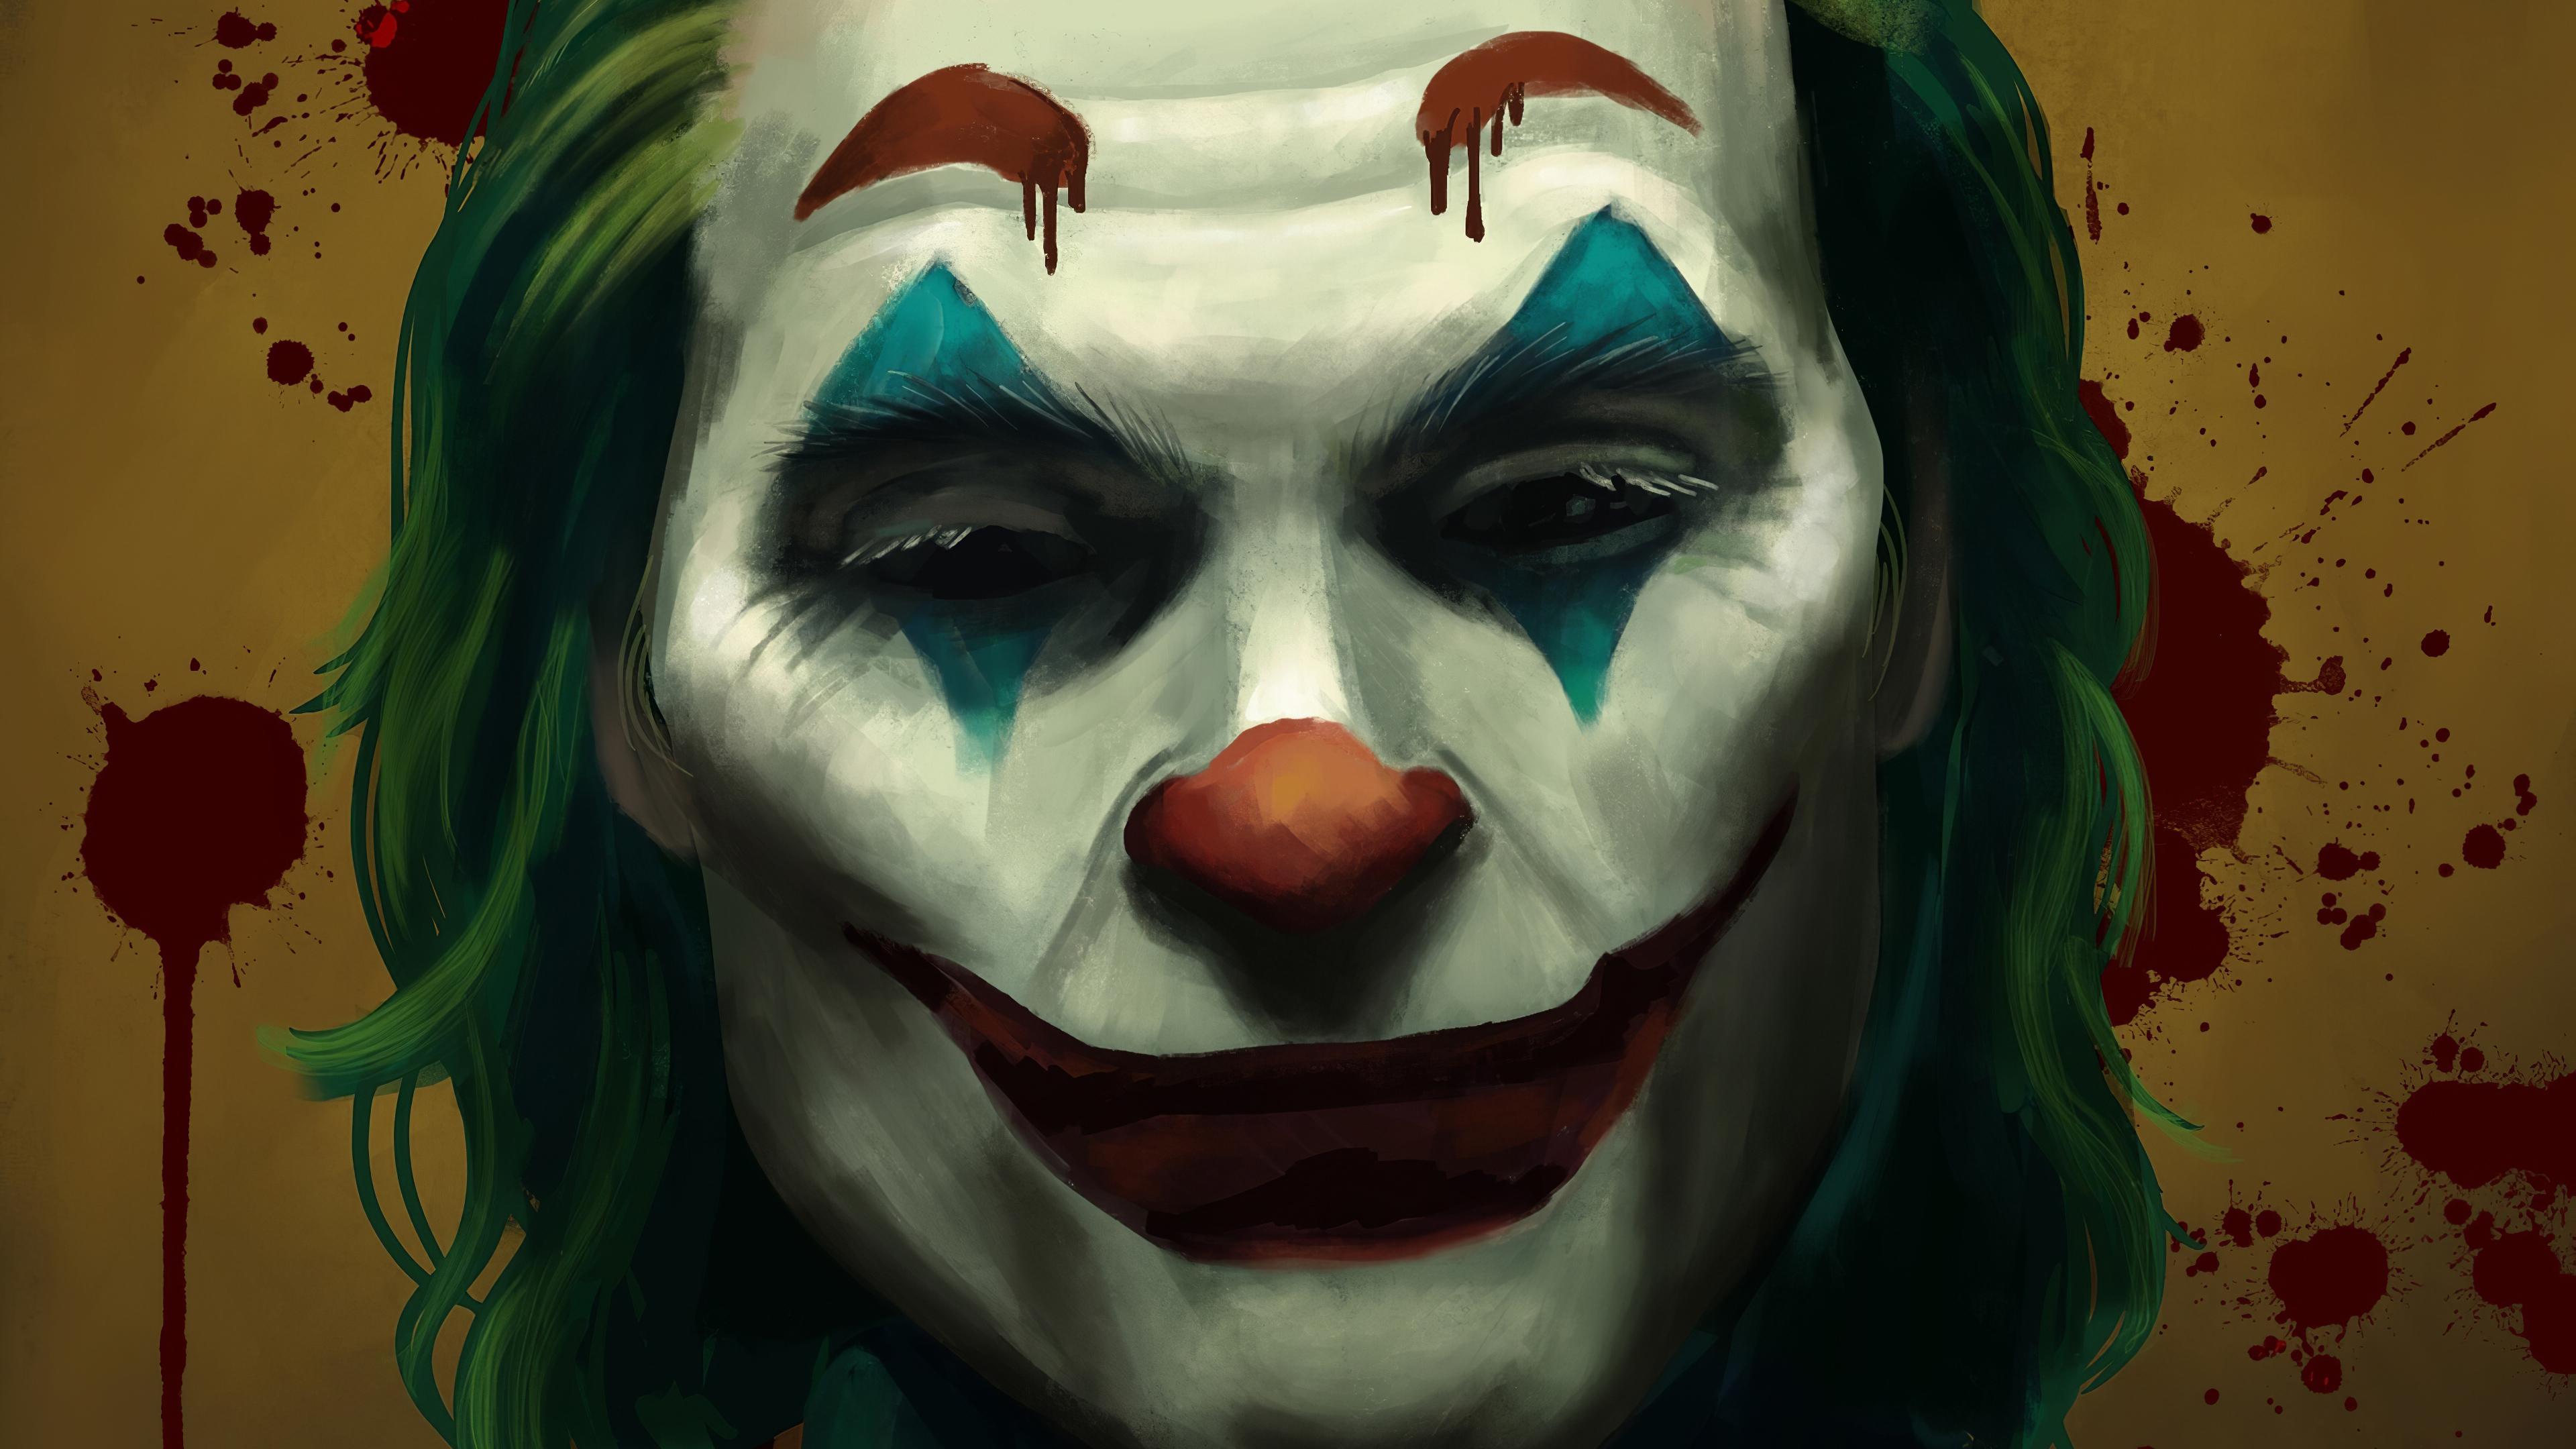 Joker 4k Ultra HD Wallpaper by Marina Gonçalves